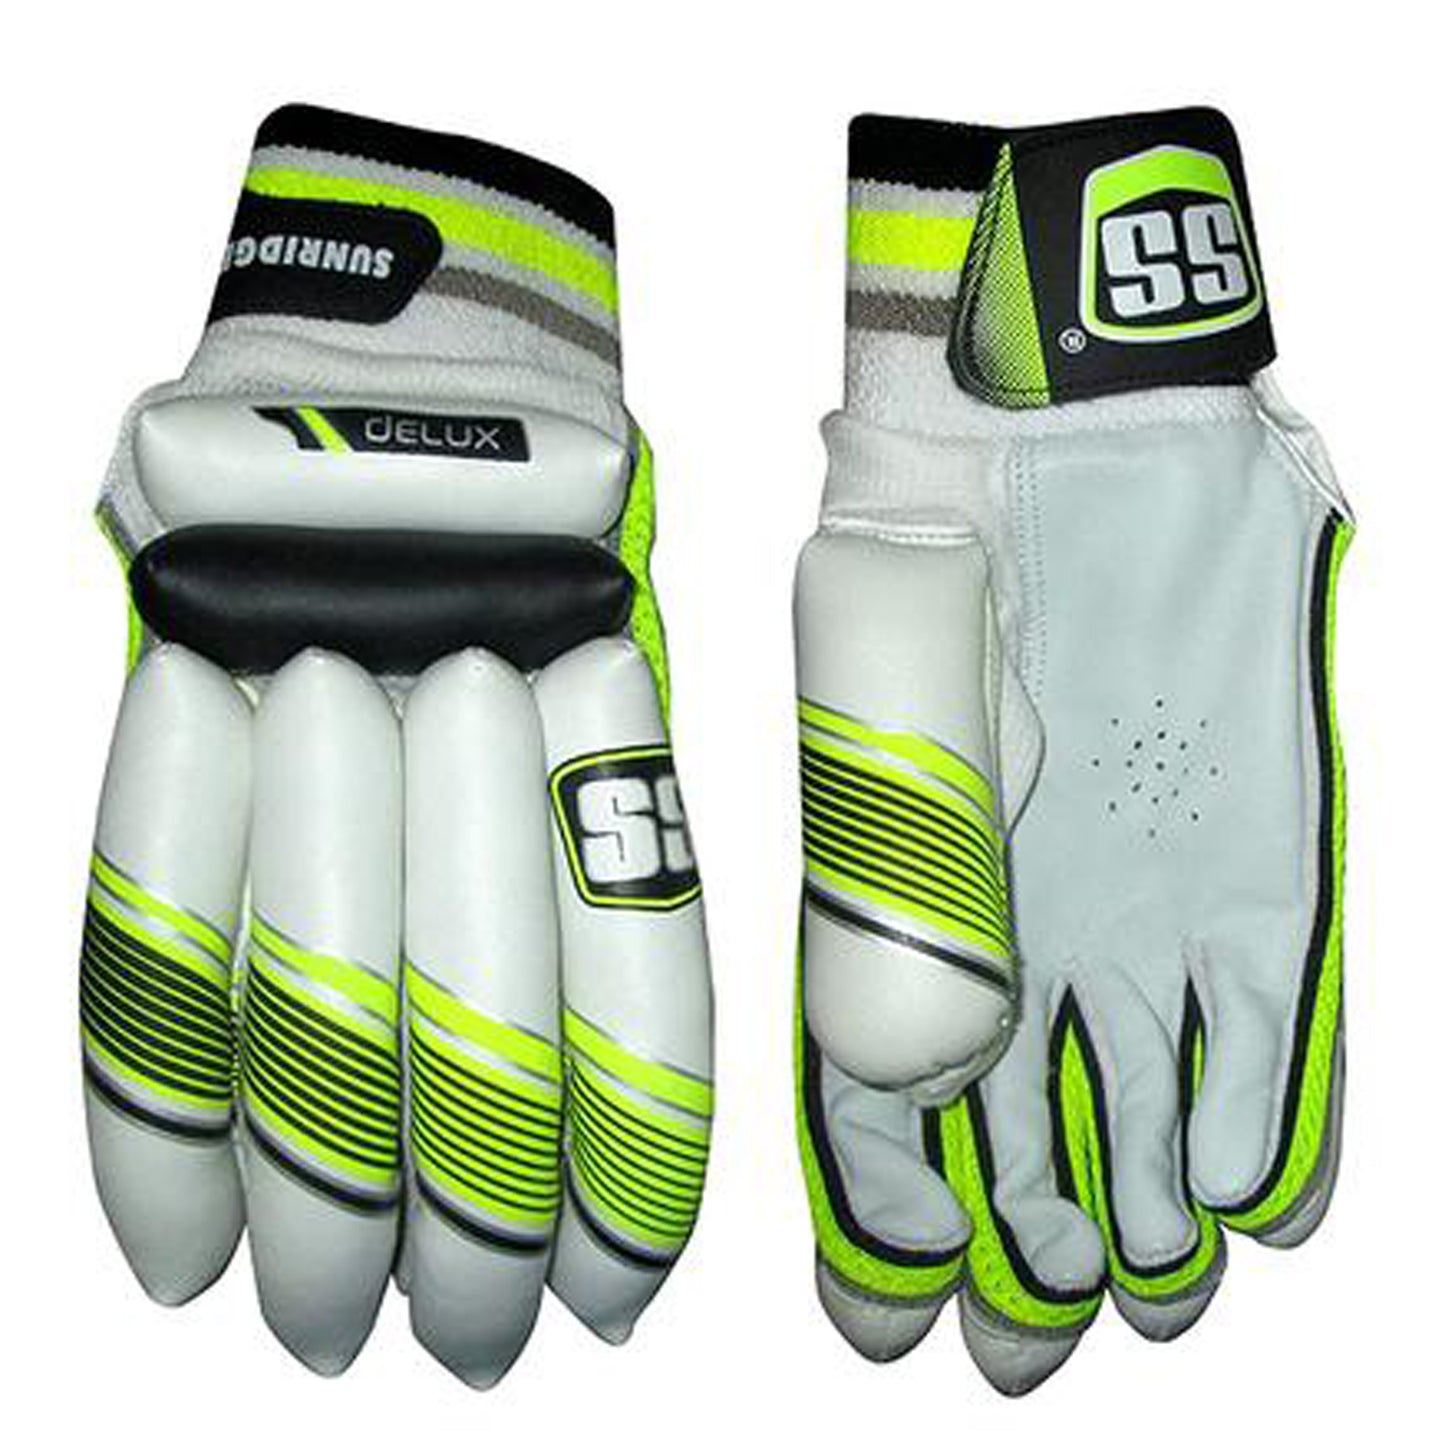 SS Deluxe Cricket Batting Gloves - Best Price online Prokicksports.com